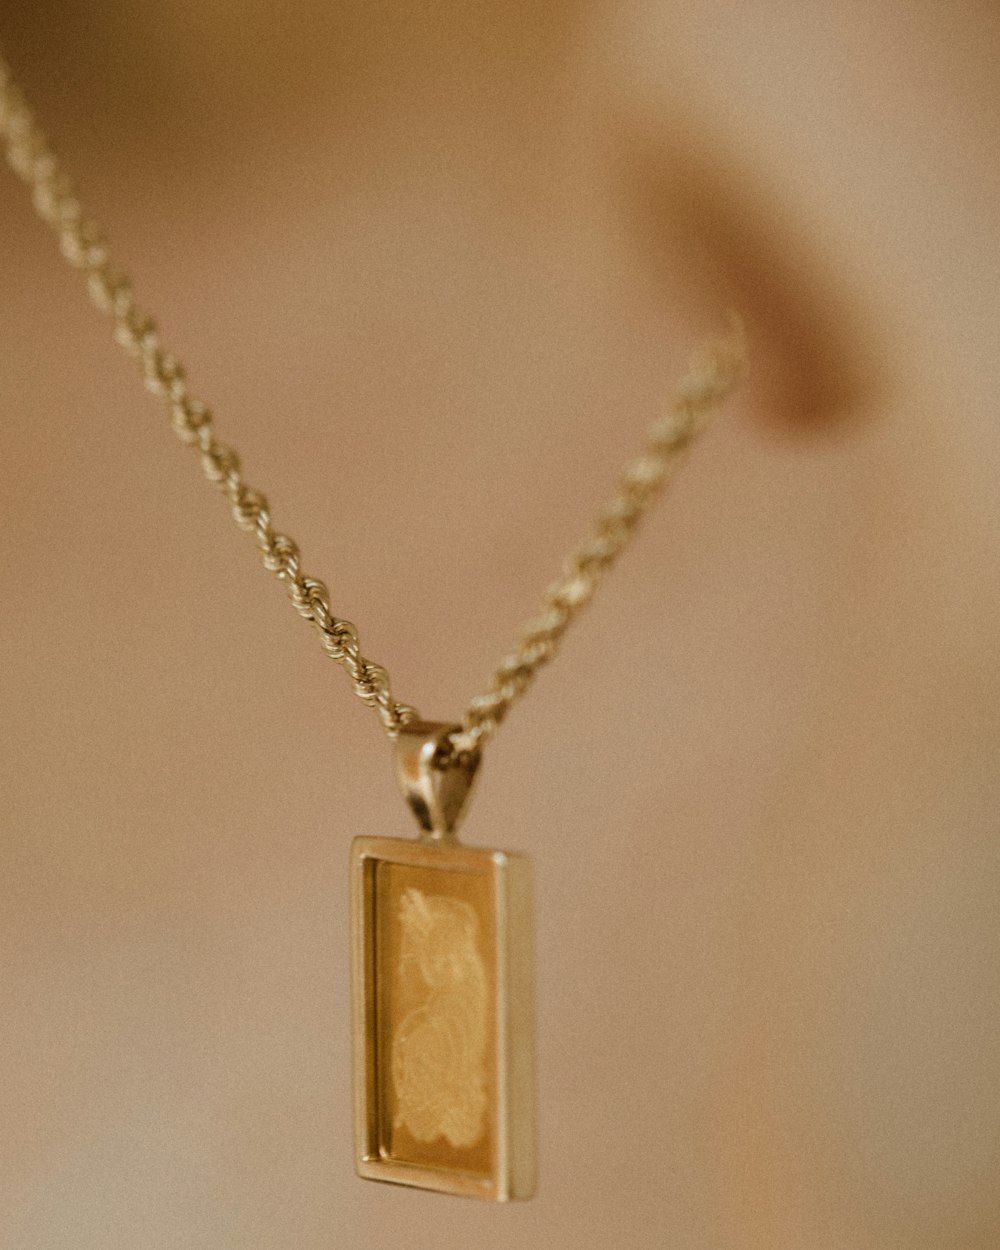 gold rectangular pendant necklace on white surface